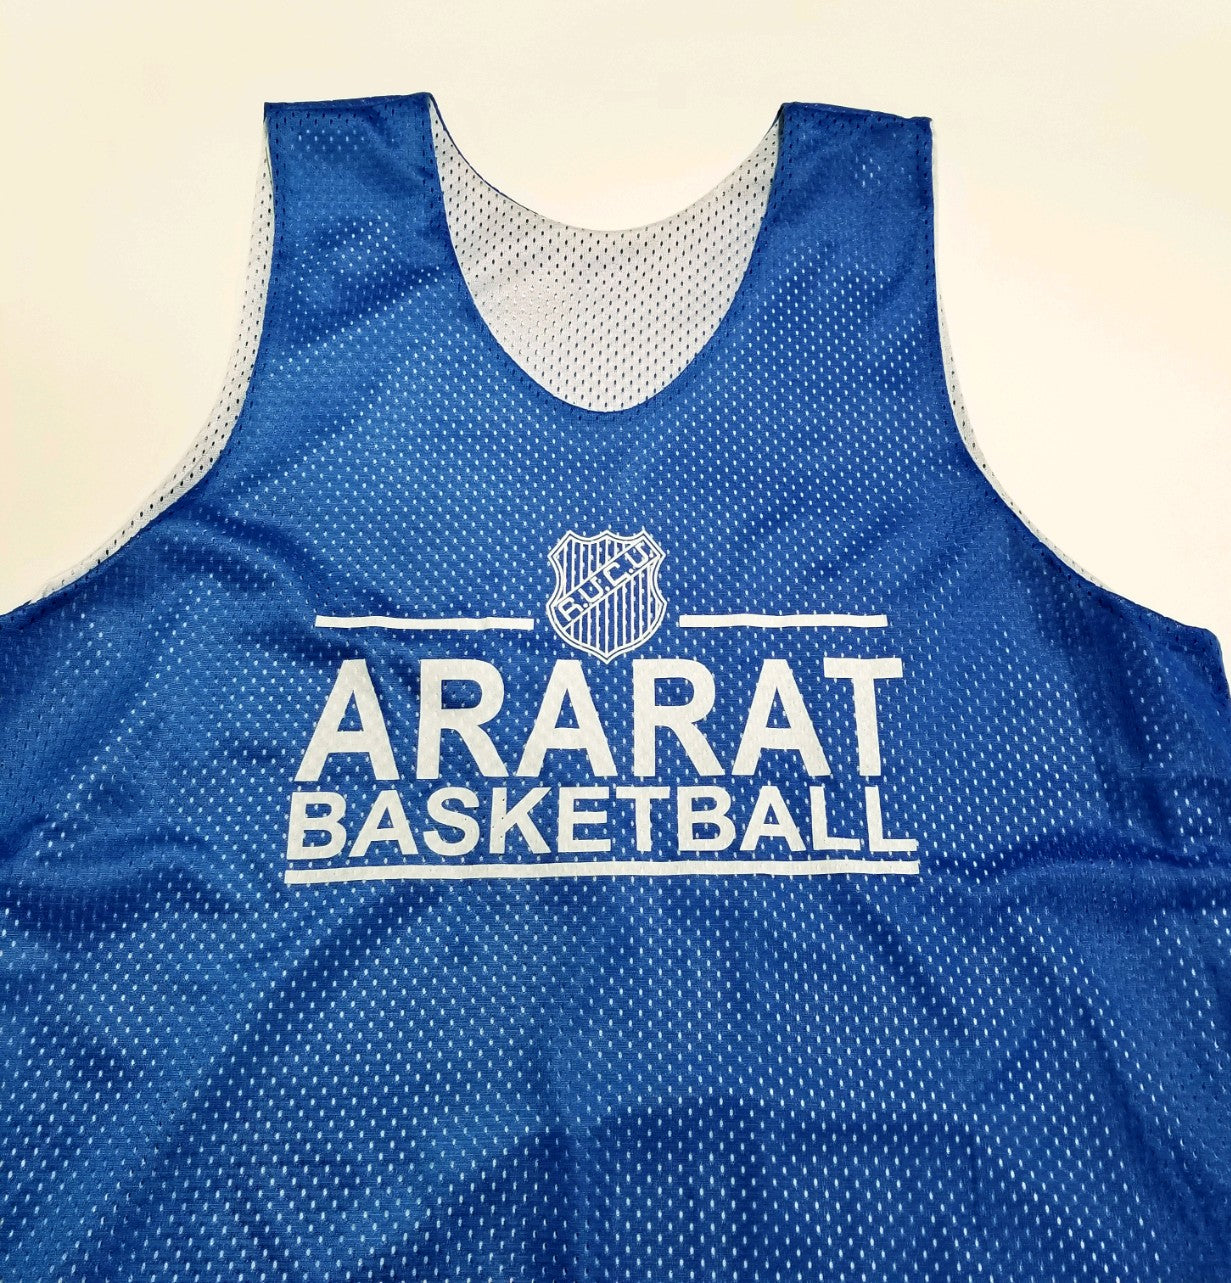 BASKETBALL PRACTICE JERSEY – Homenetmen Ararat/ Team Sports Inc.